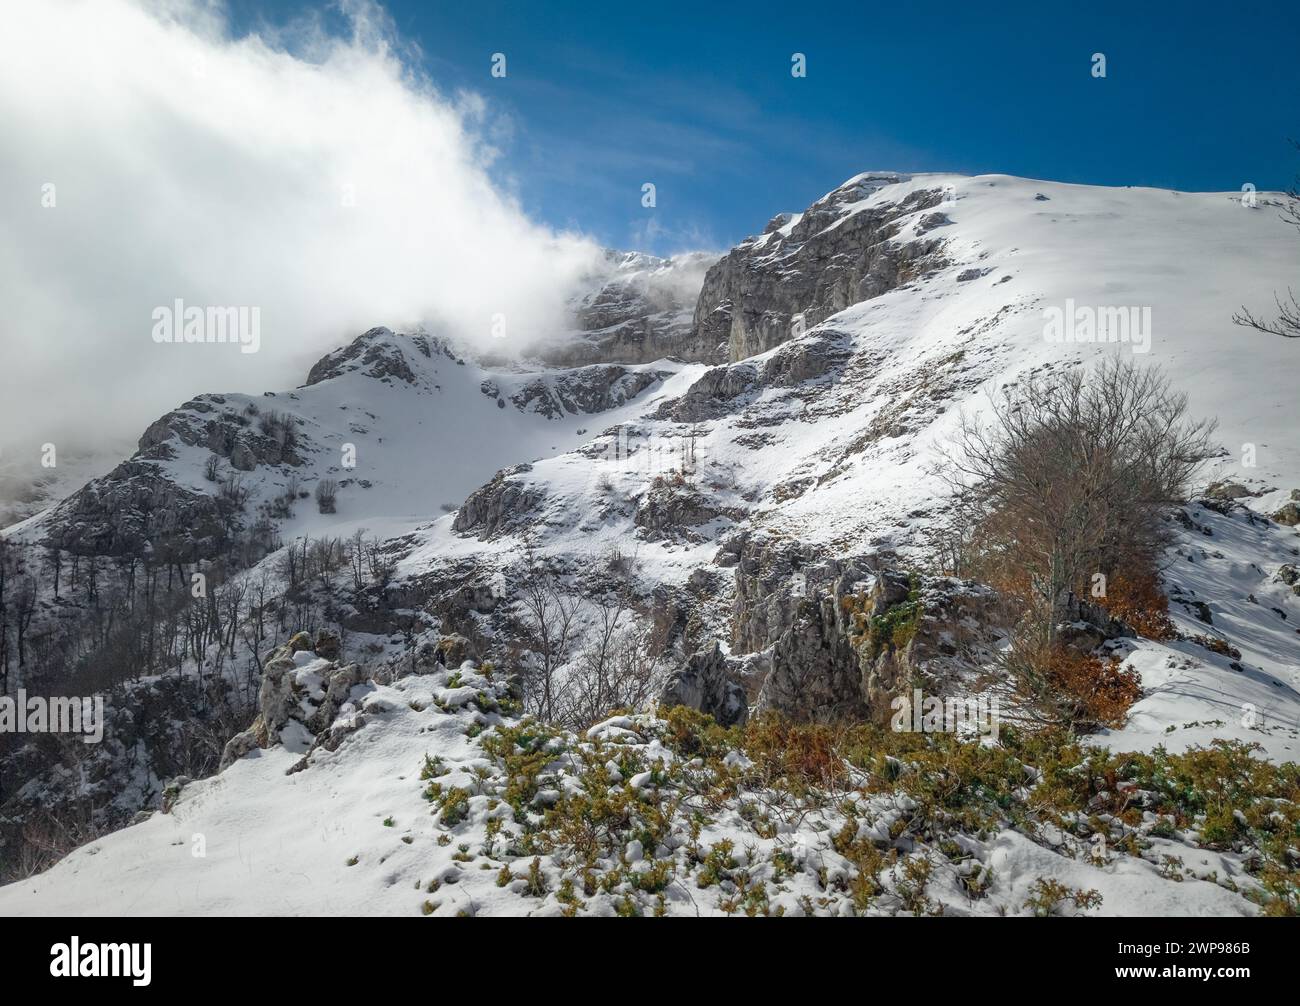 Mount Cantari (Lazio, Italy) - In the Monti Simbruini mountain range with Monte Viglio, province of Frosinone, here in winter with snow and alpinist. Stock Photo